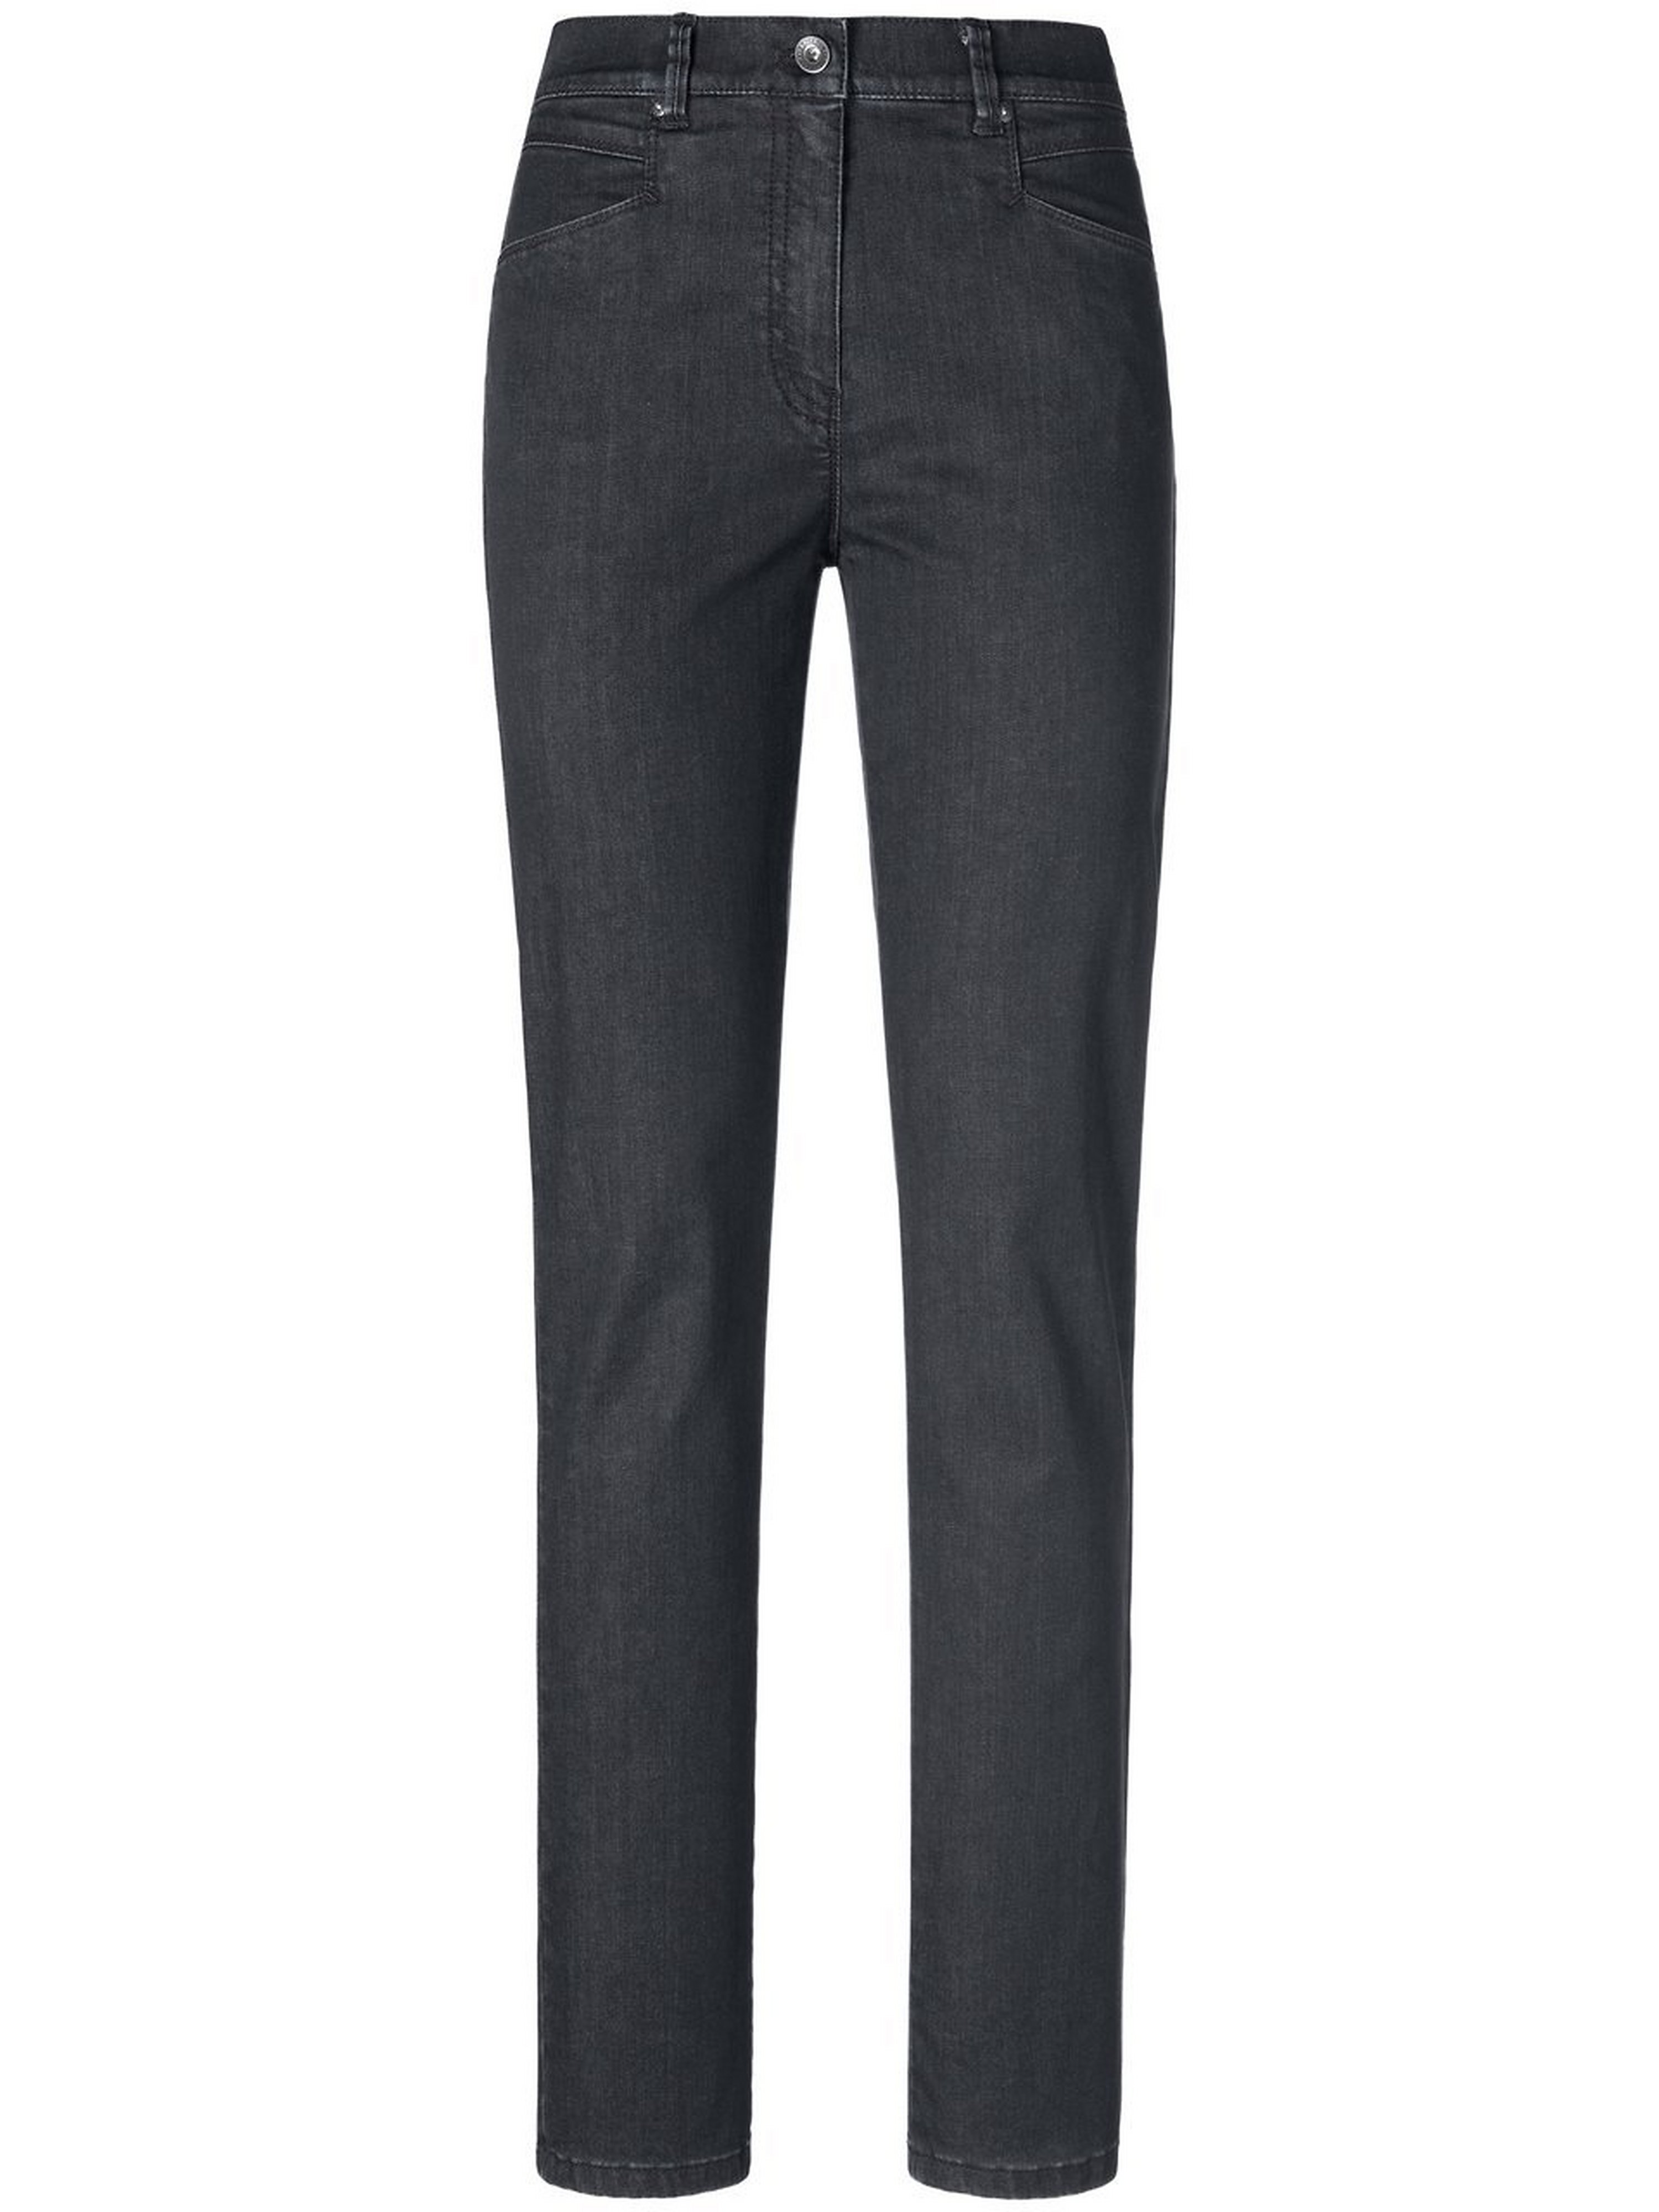 Corrigerende Proform S Super Slim-jeans model Lea Van Raphaela by Brax denim